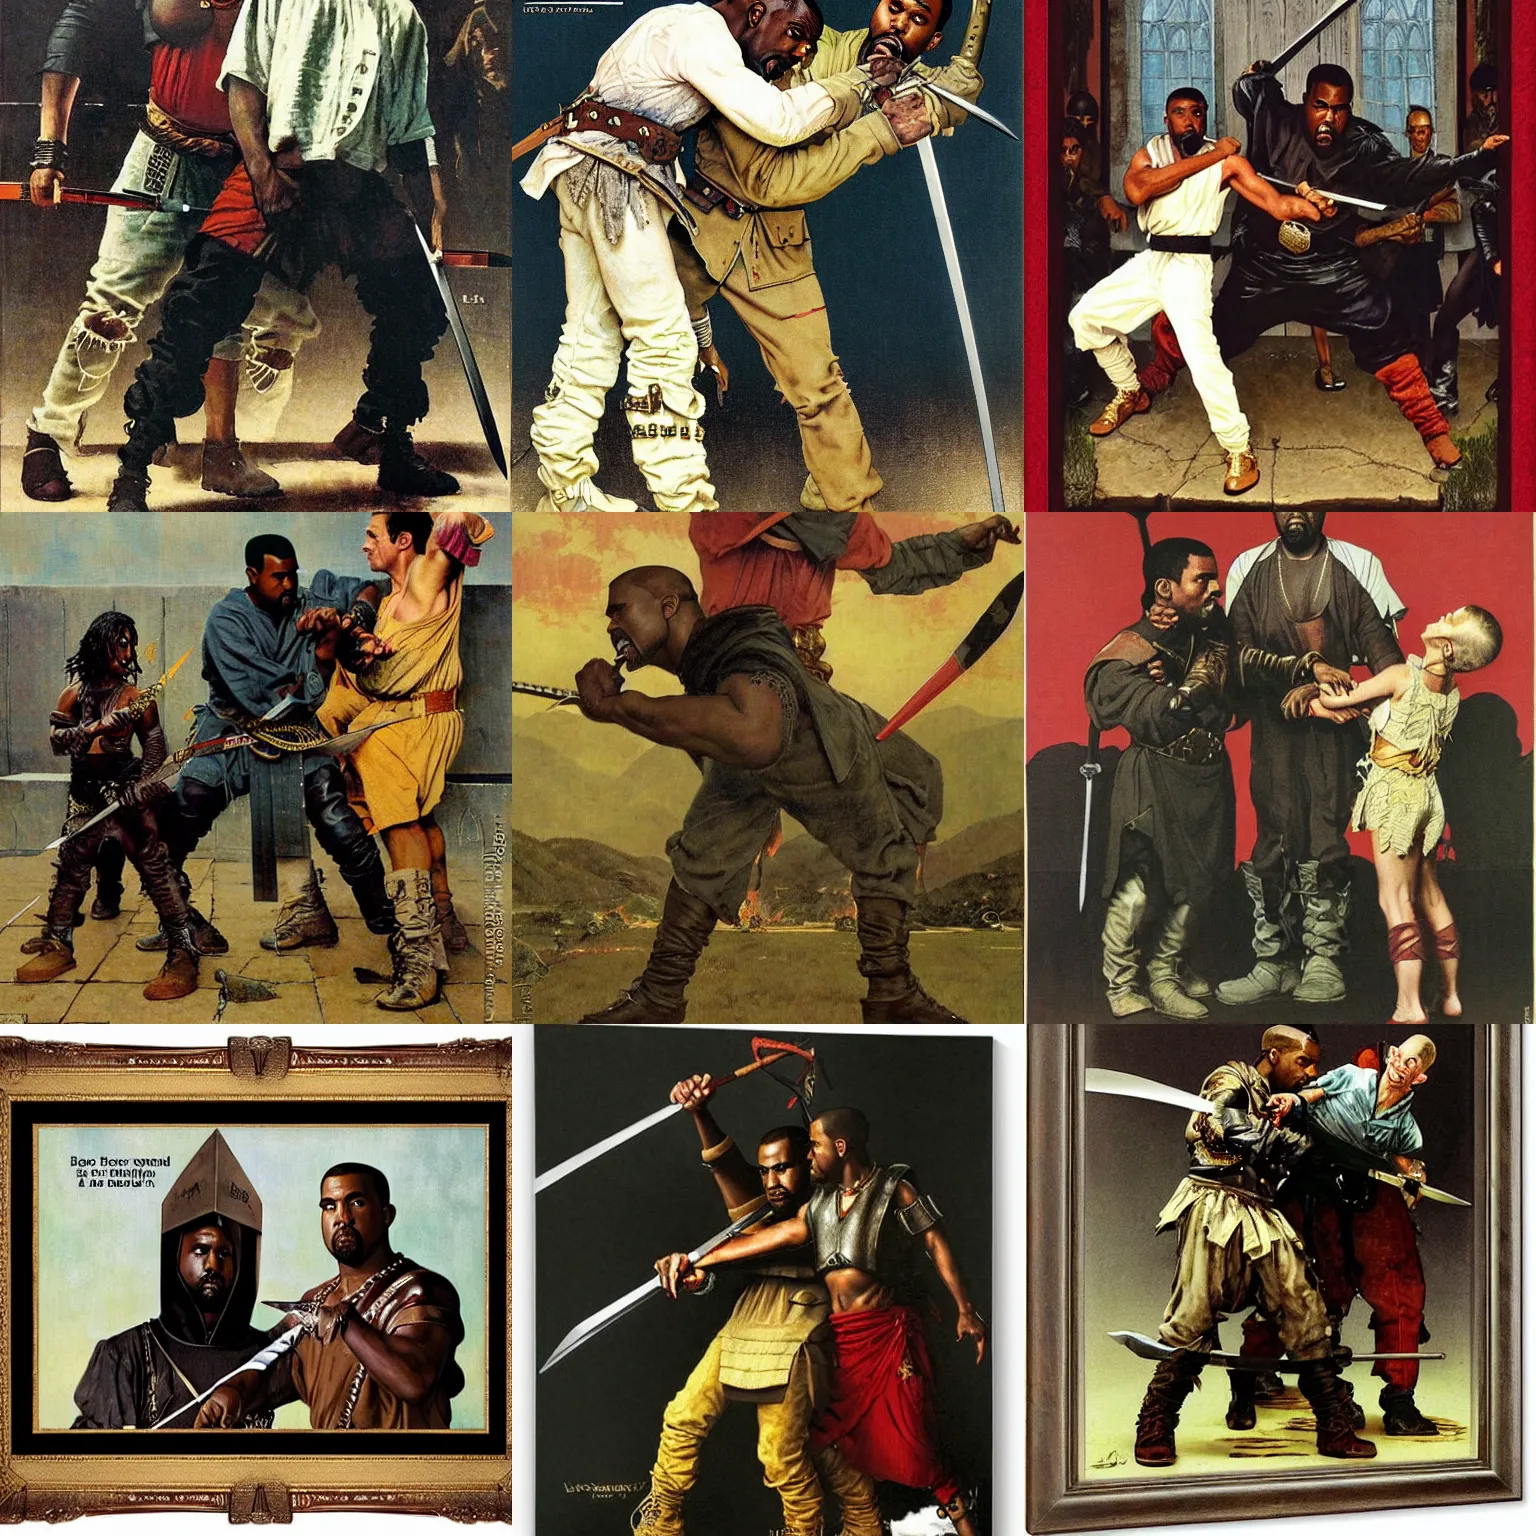 Prompt: kanye west sword fighting Kanye east, epic fantasy, by norman rockwell